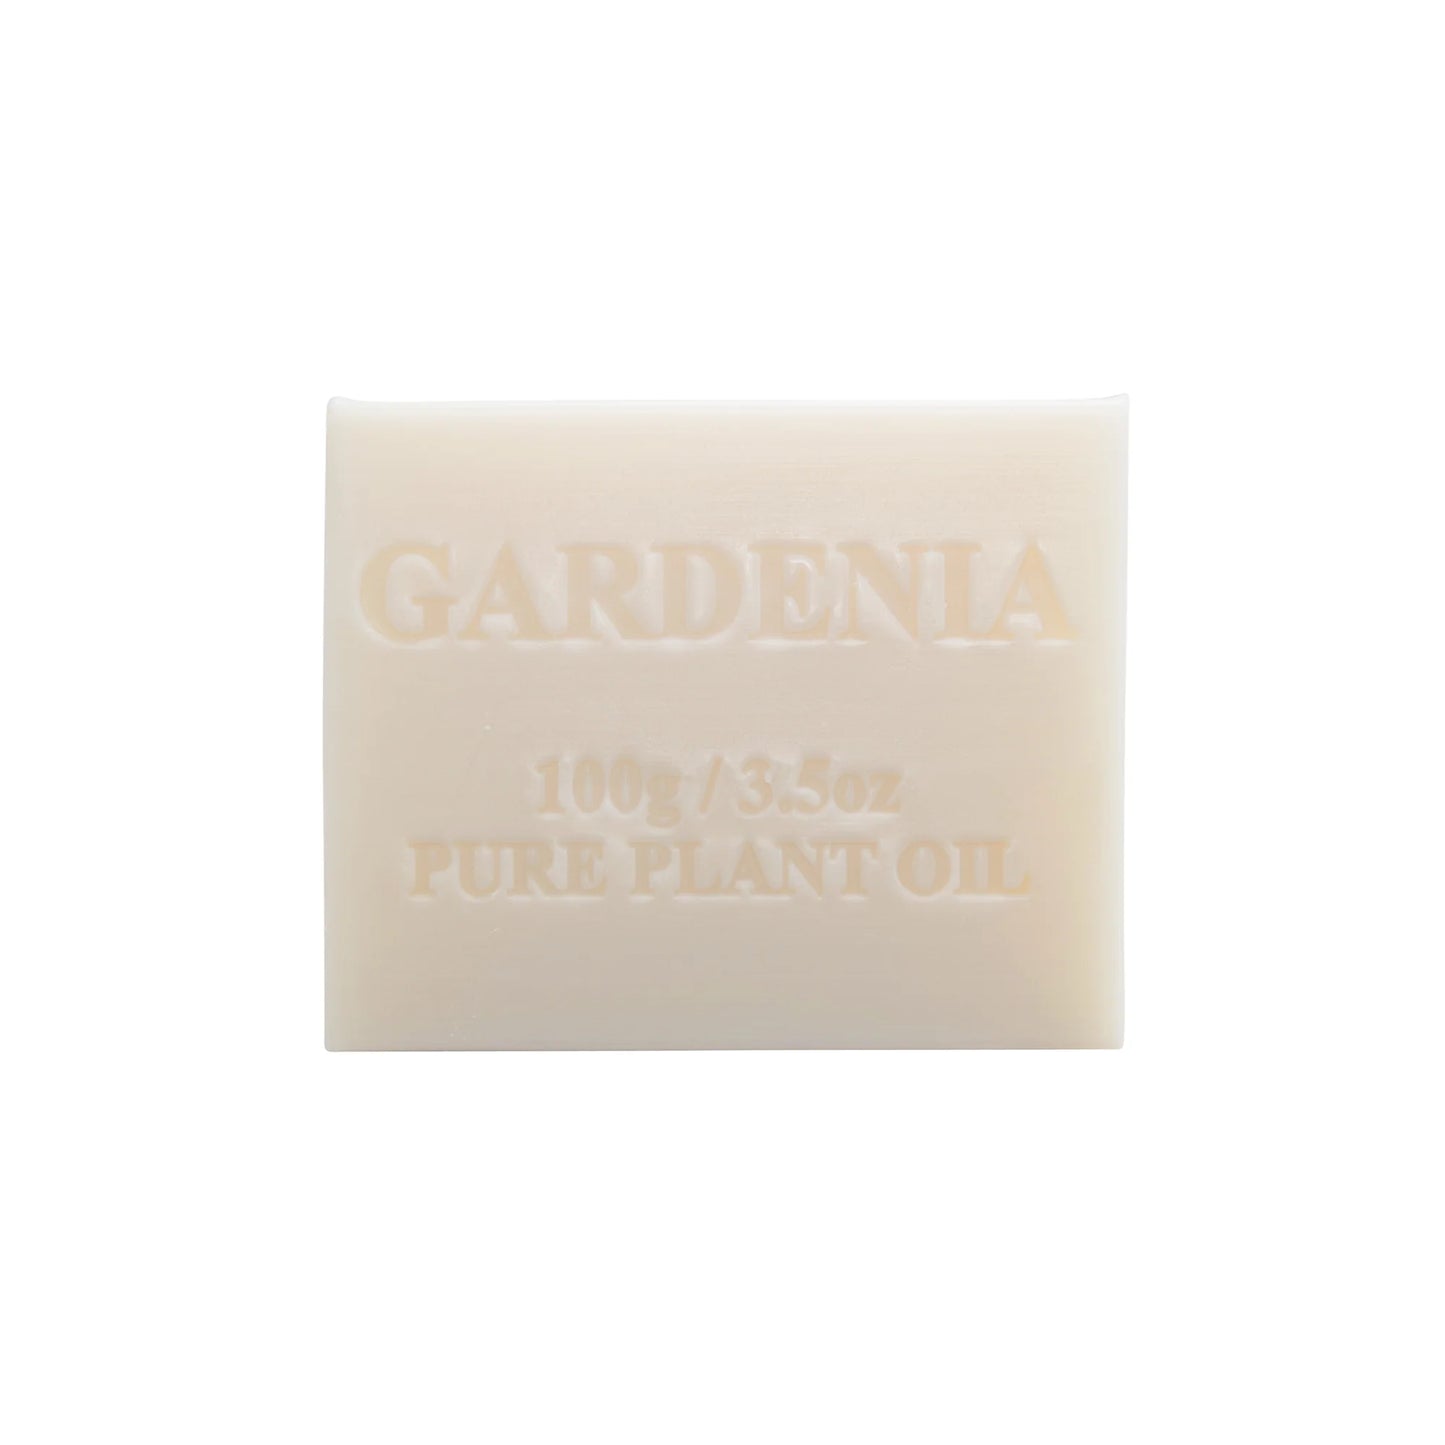 Natural Soap - Gardenia